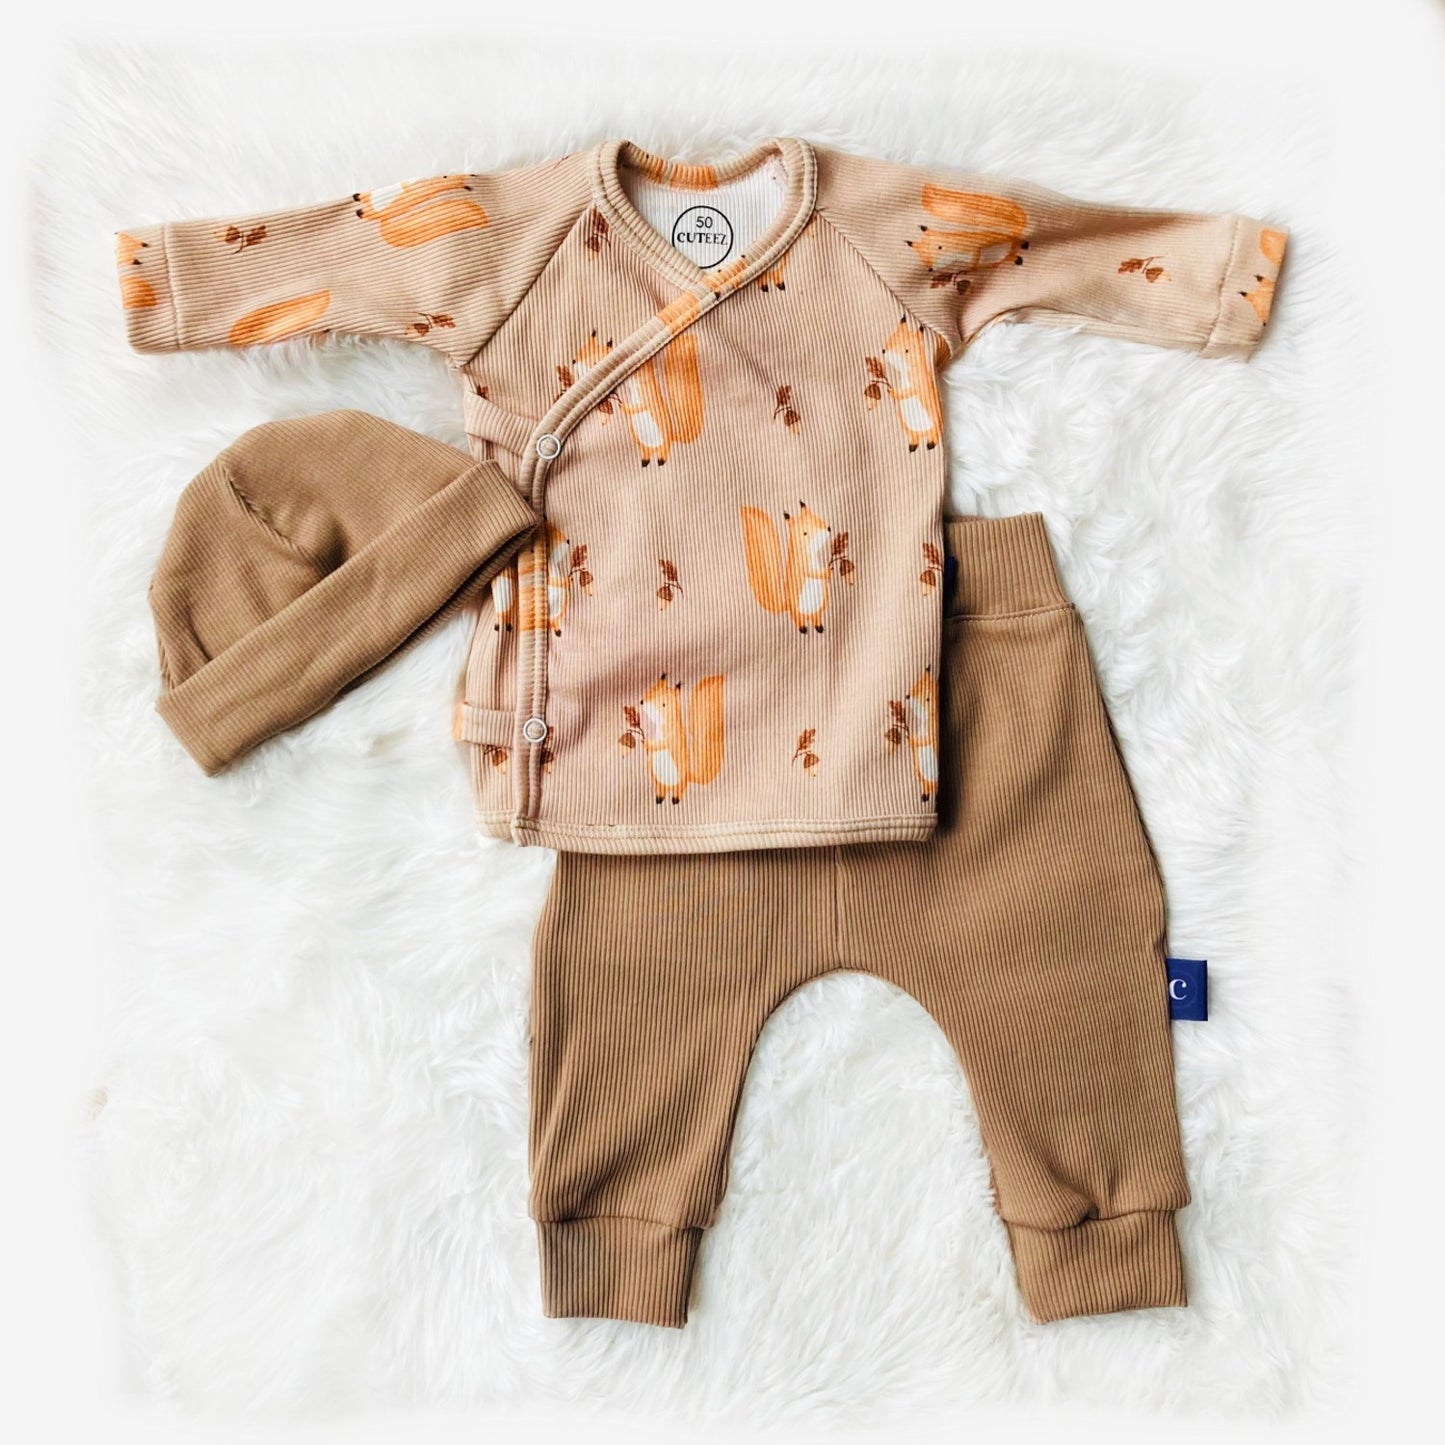 Driedelig setje Eekhoorn. Unisex handgemaakte duurzame babykleding maat 50-80. Webshop Cuteez. 